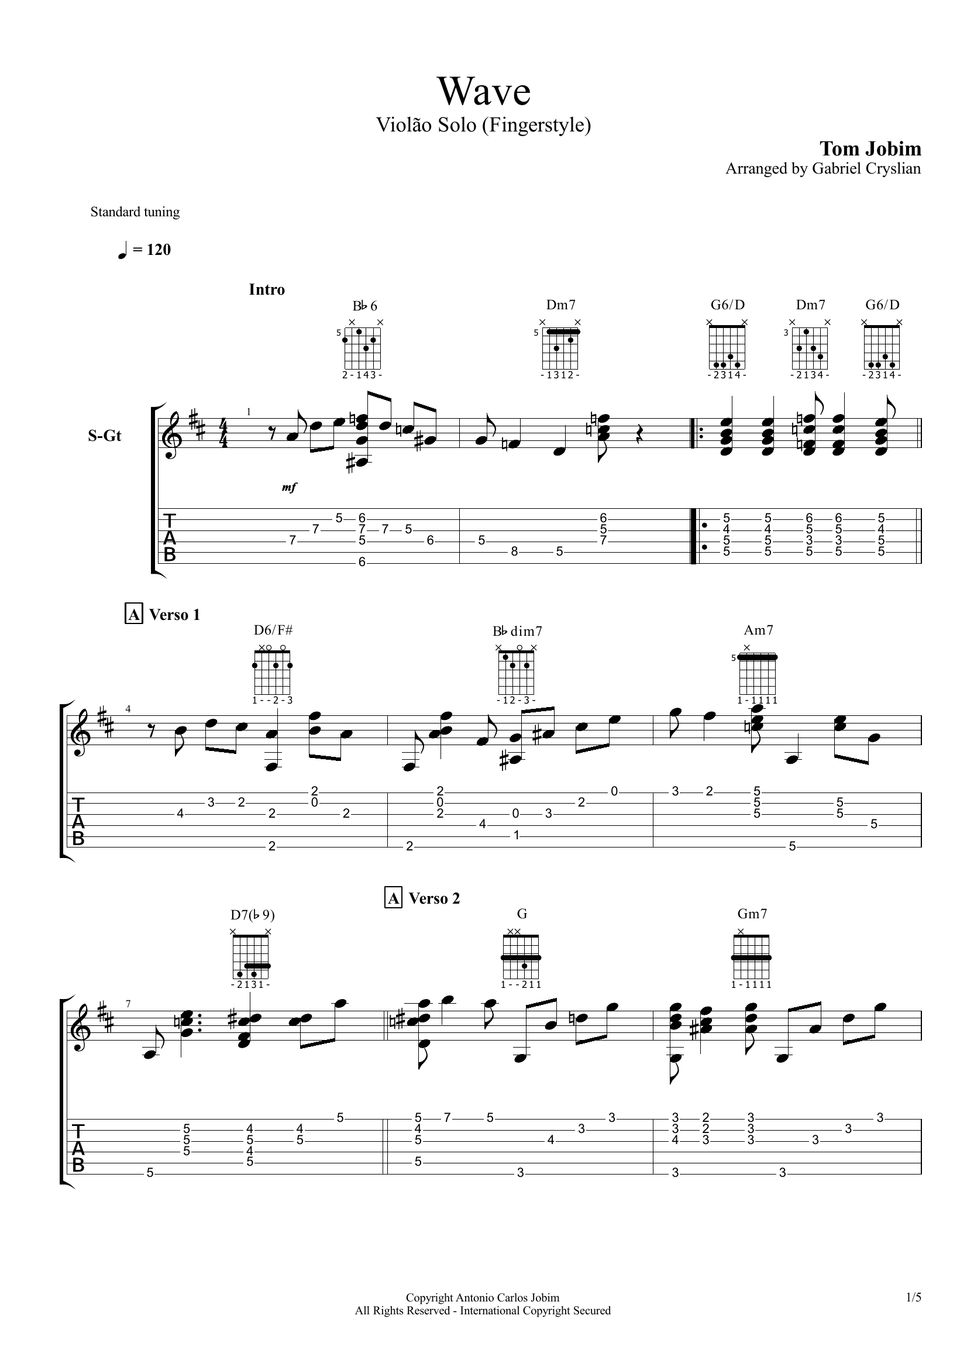 Tom Jobim - Wave (Arranjo para violão solo (fingerstyle)) by Creed Taylor